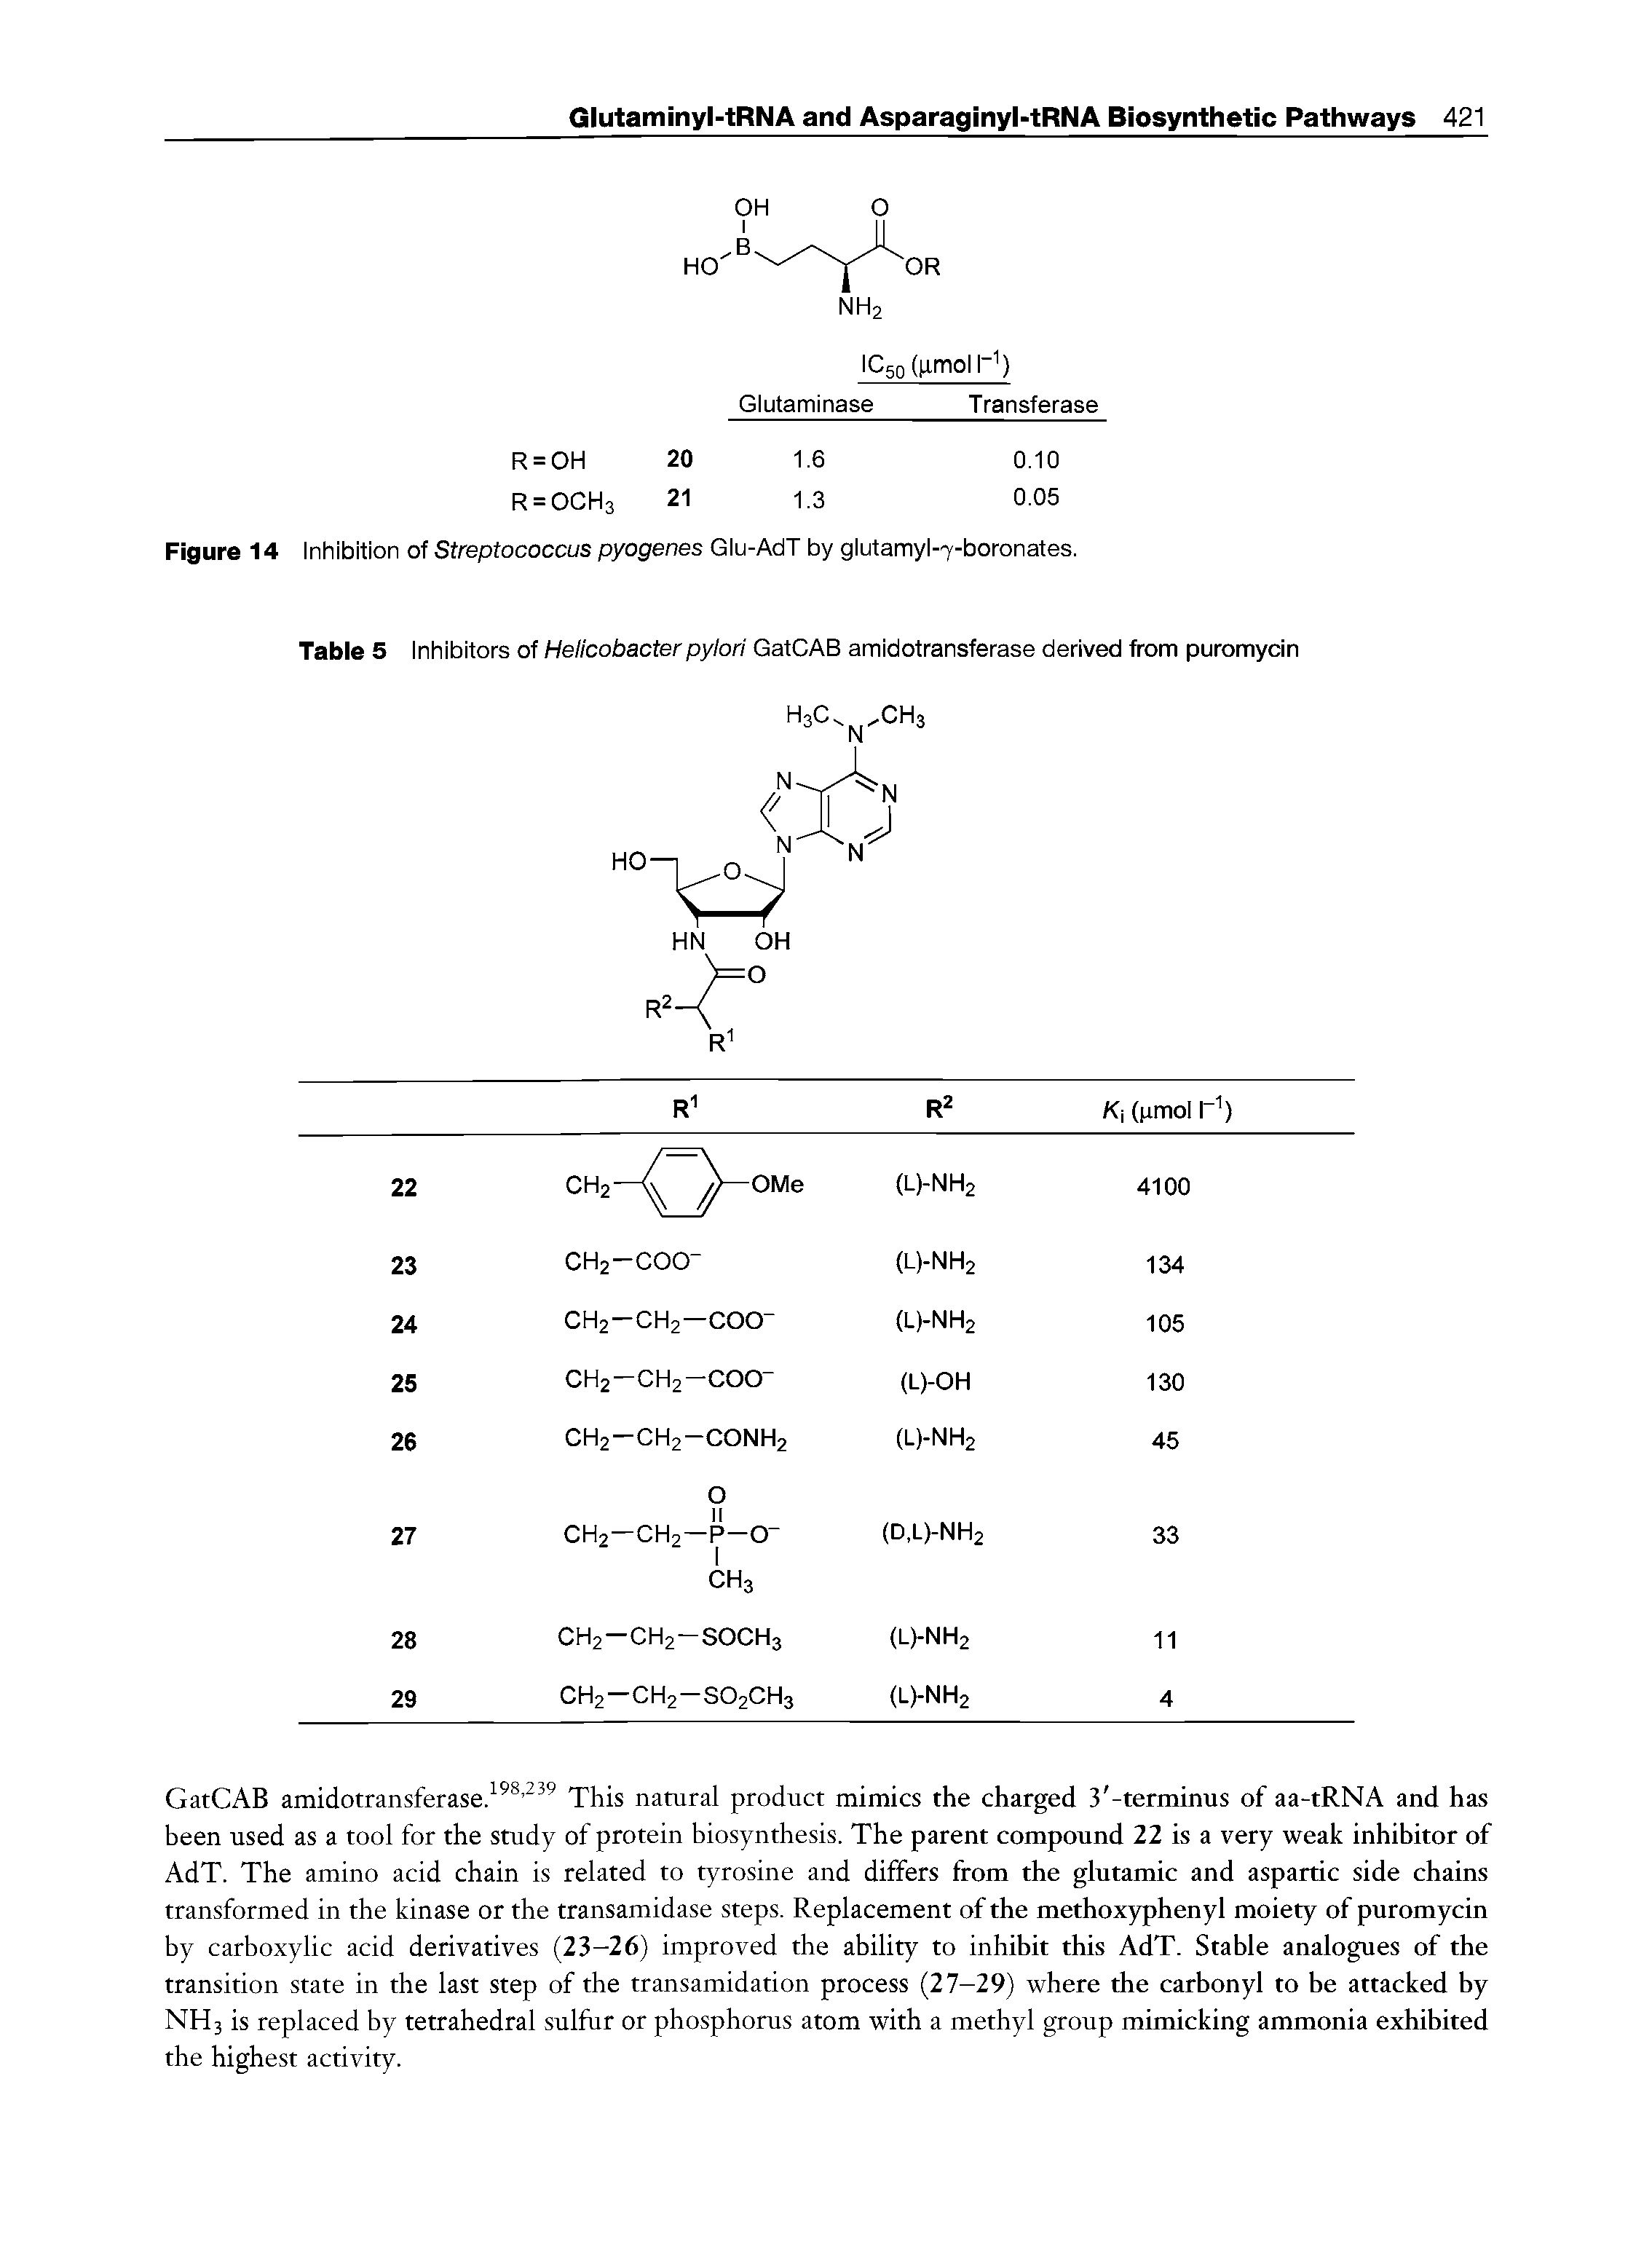 Figure 14 Inhibition of Streptococcus pyogenes Glu-AdT by glutamyl-7-boronates.